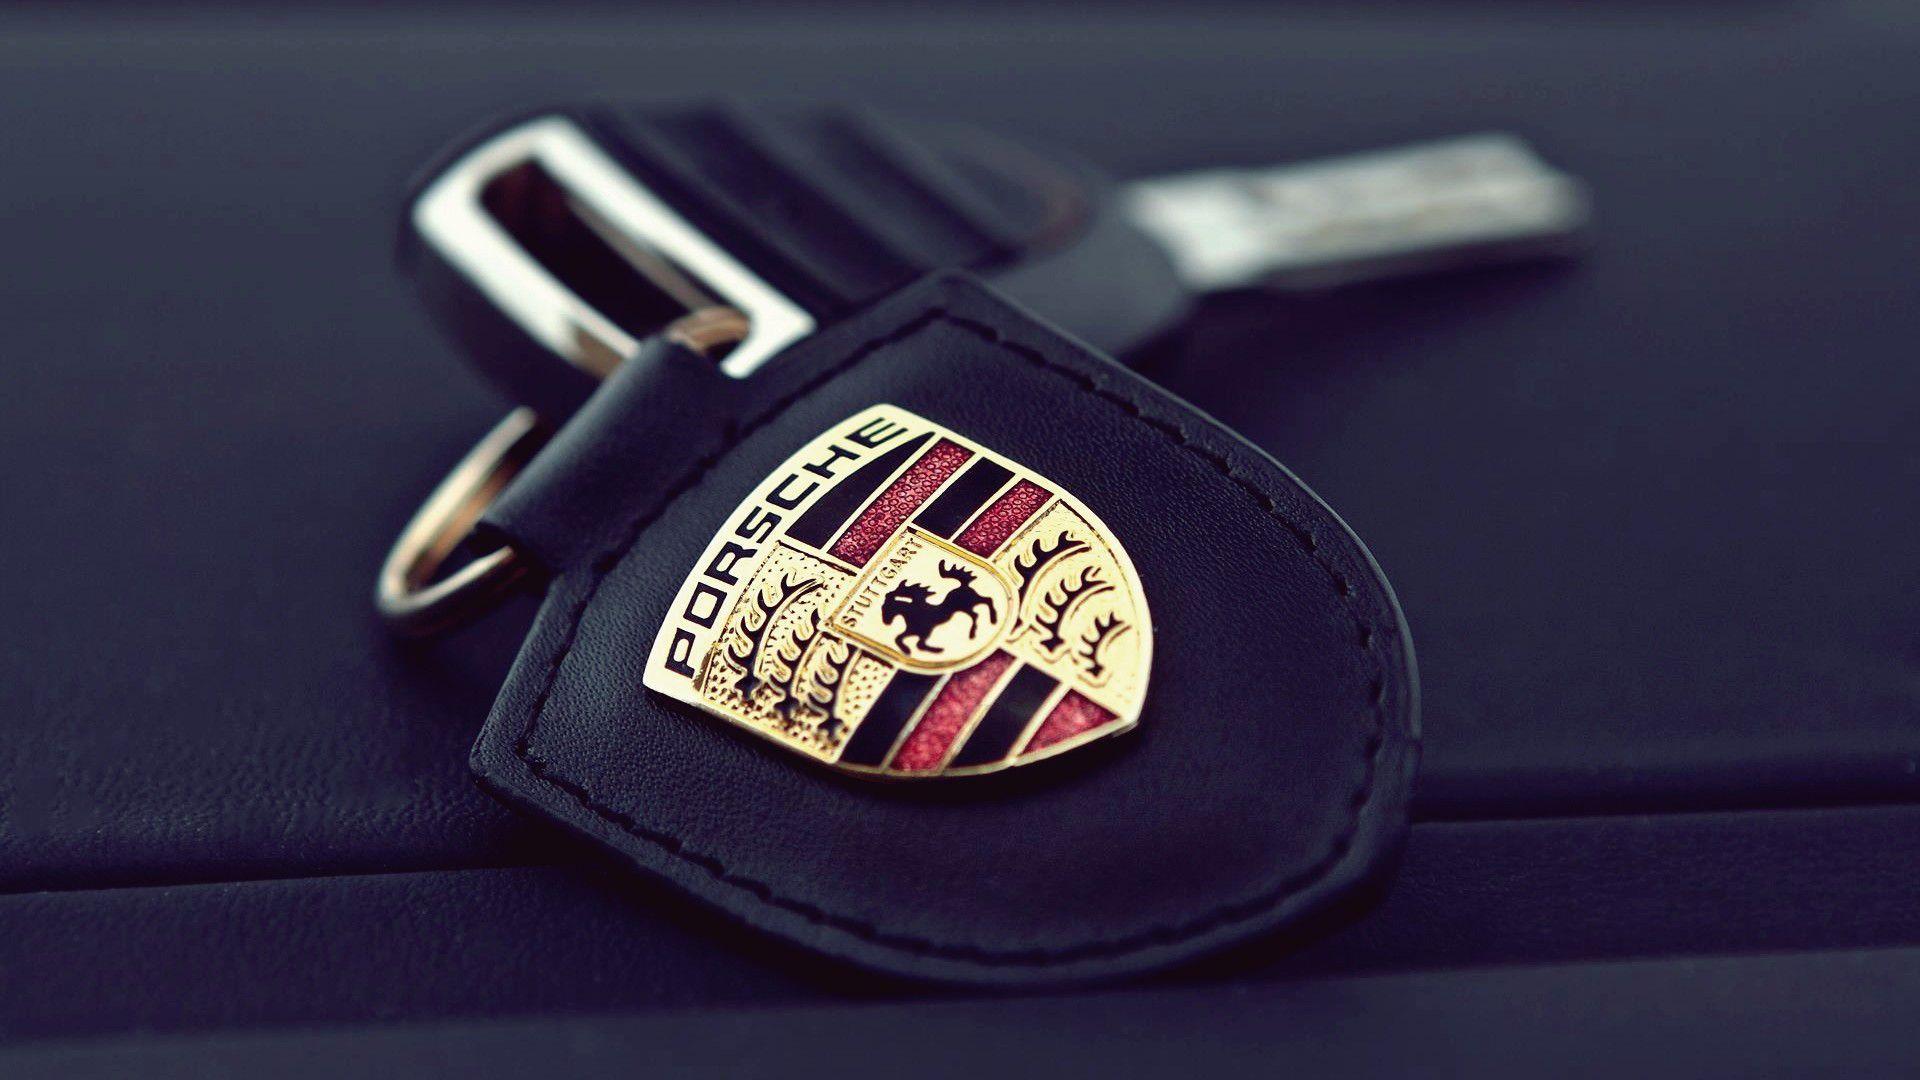 New Porsche Logo HD Wallpaper Background Image Downloads